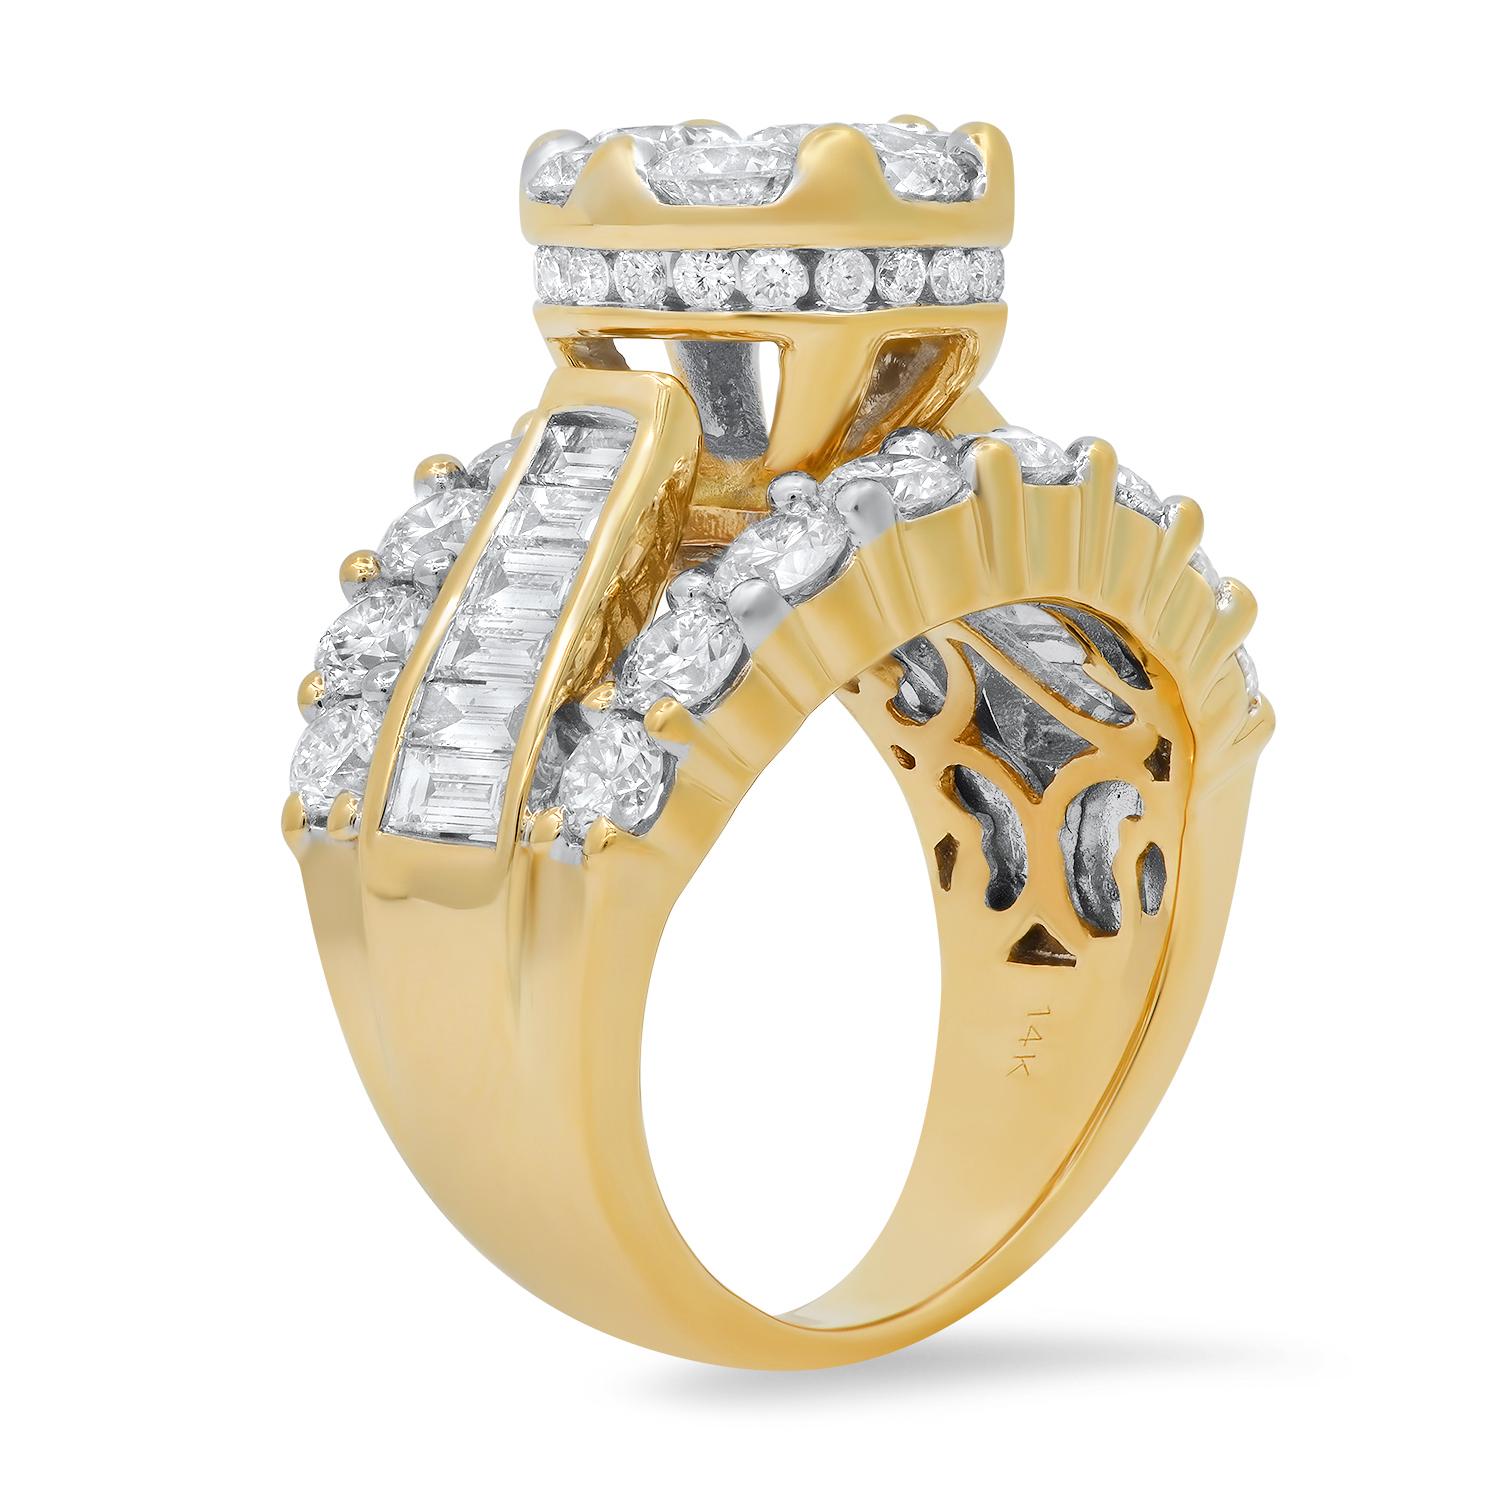 14K Yellow Gold Setting with 4.48tcw Diamond Ladies Ring